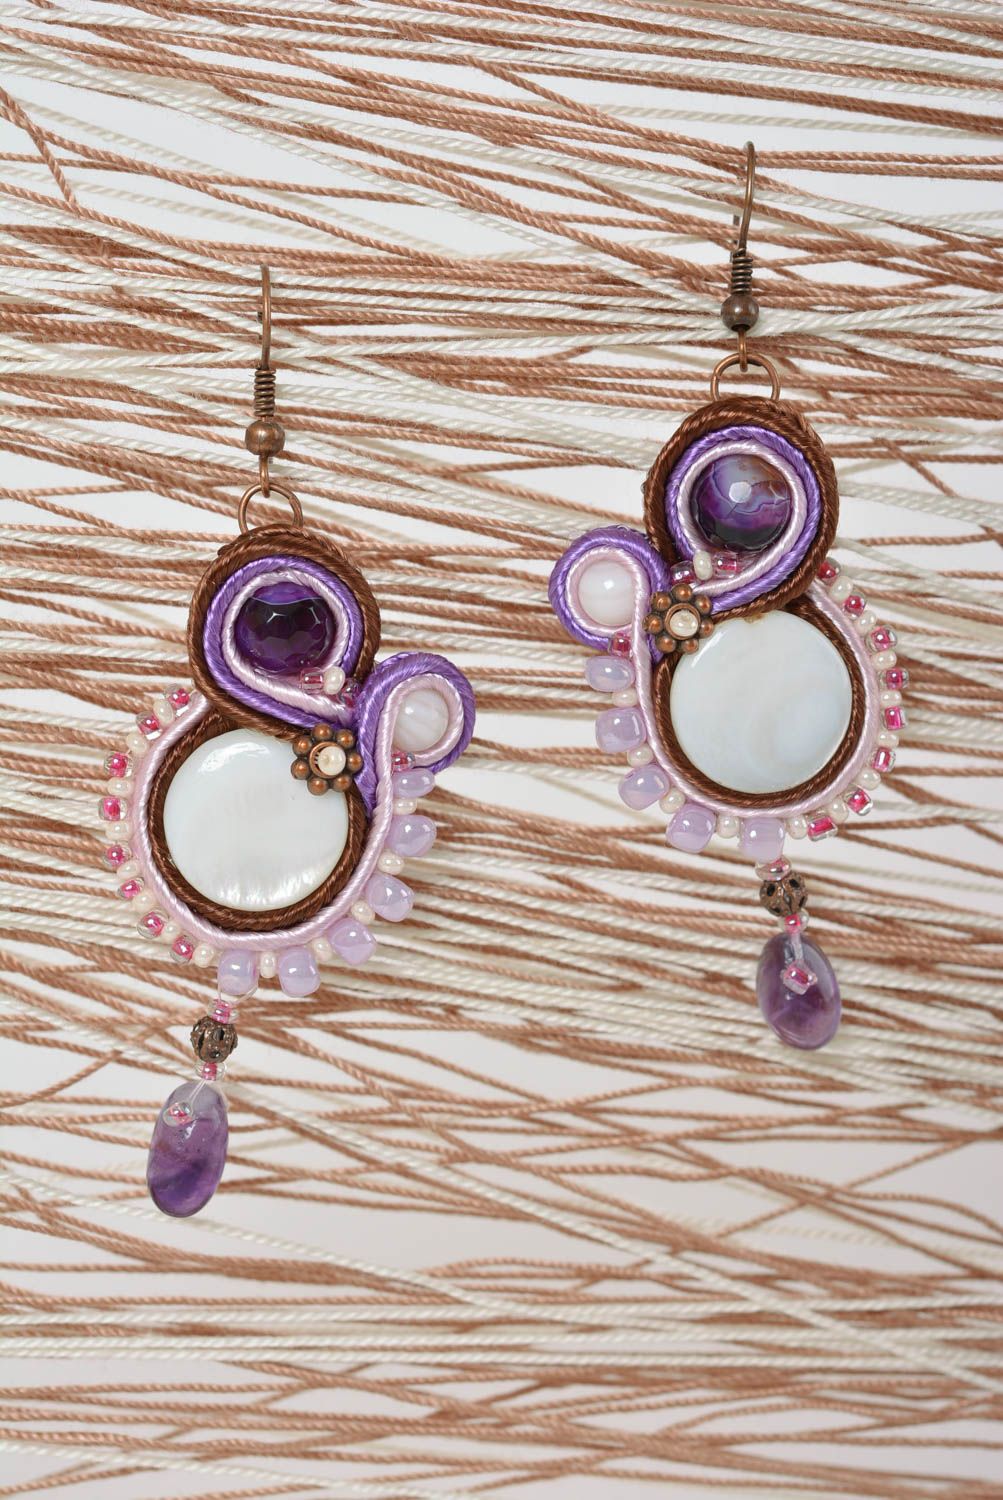 Handmade soutache jewelry soutache pendant and earrings stylish accessories photo 3